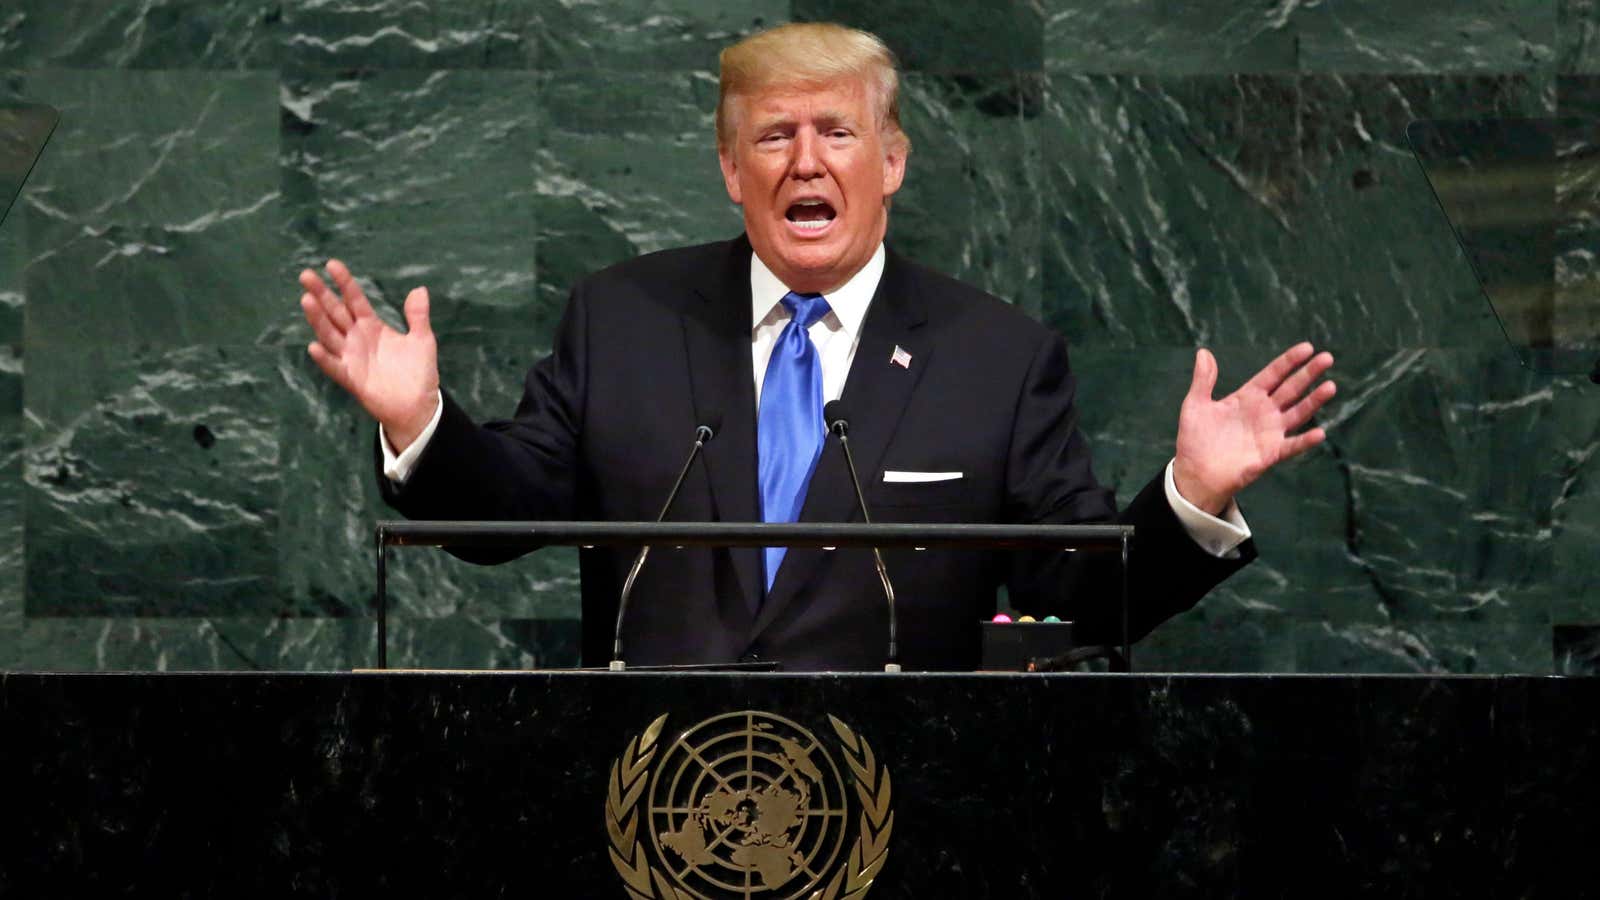 In 2017, Trump attacked Iran from the UN podium.